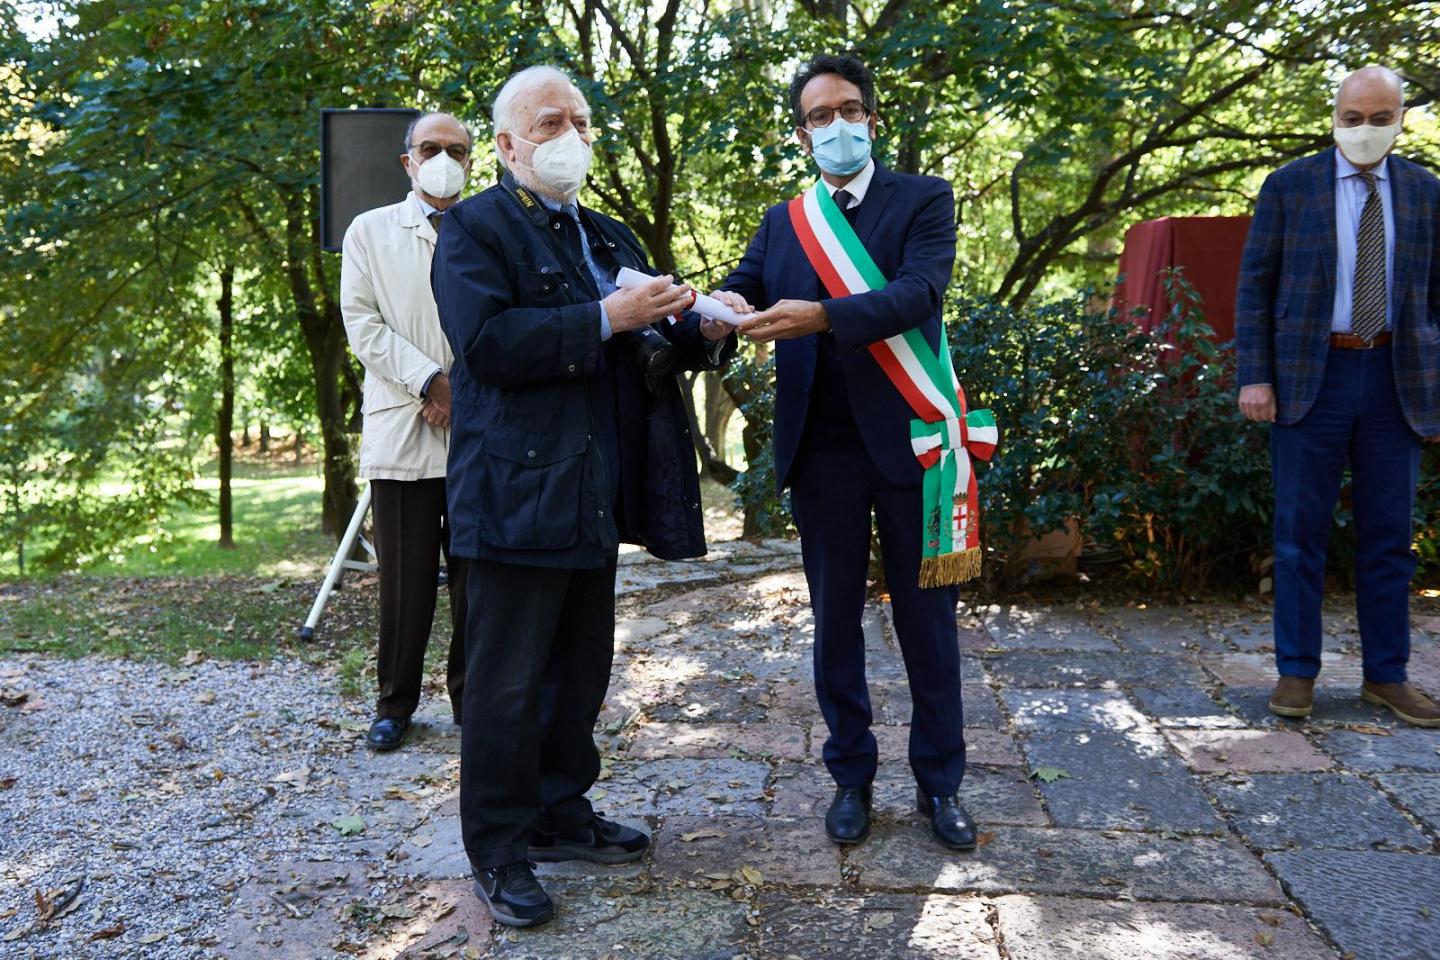 Tullio Quaianni collects the parchment for Francesco Quaianni